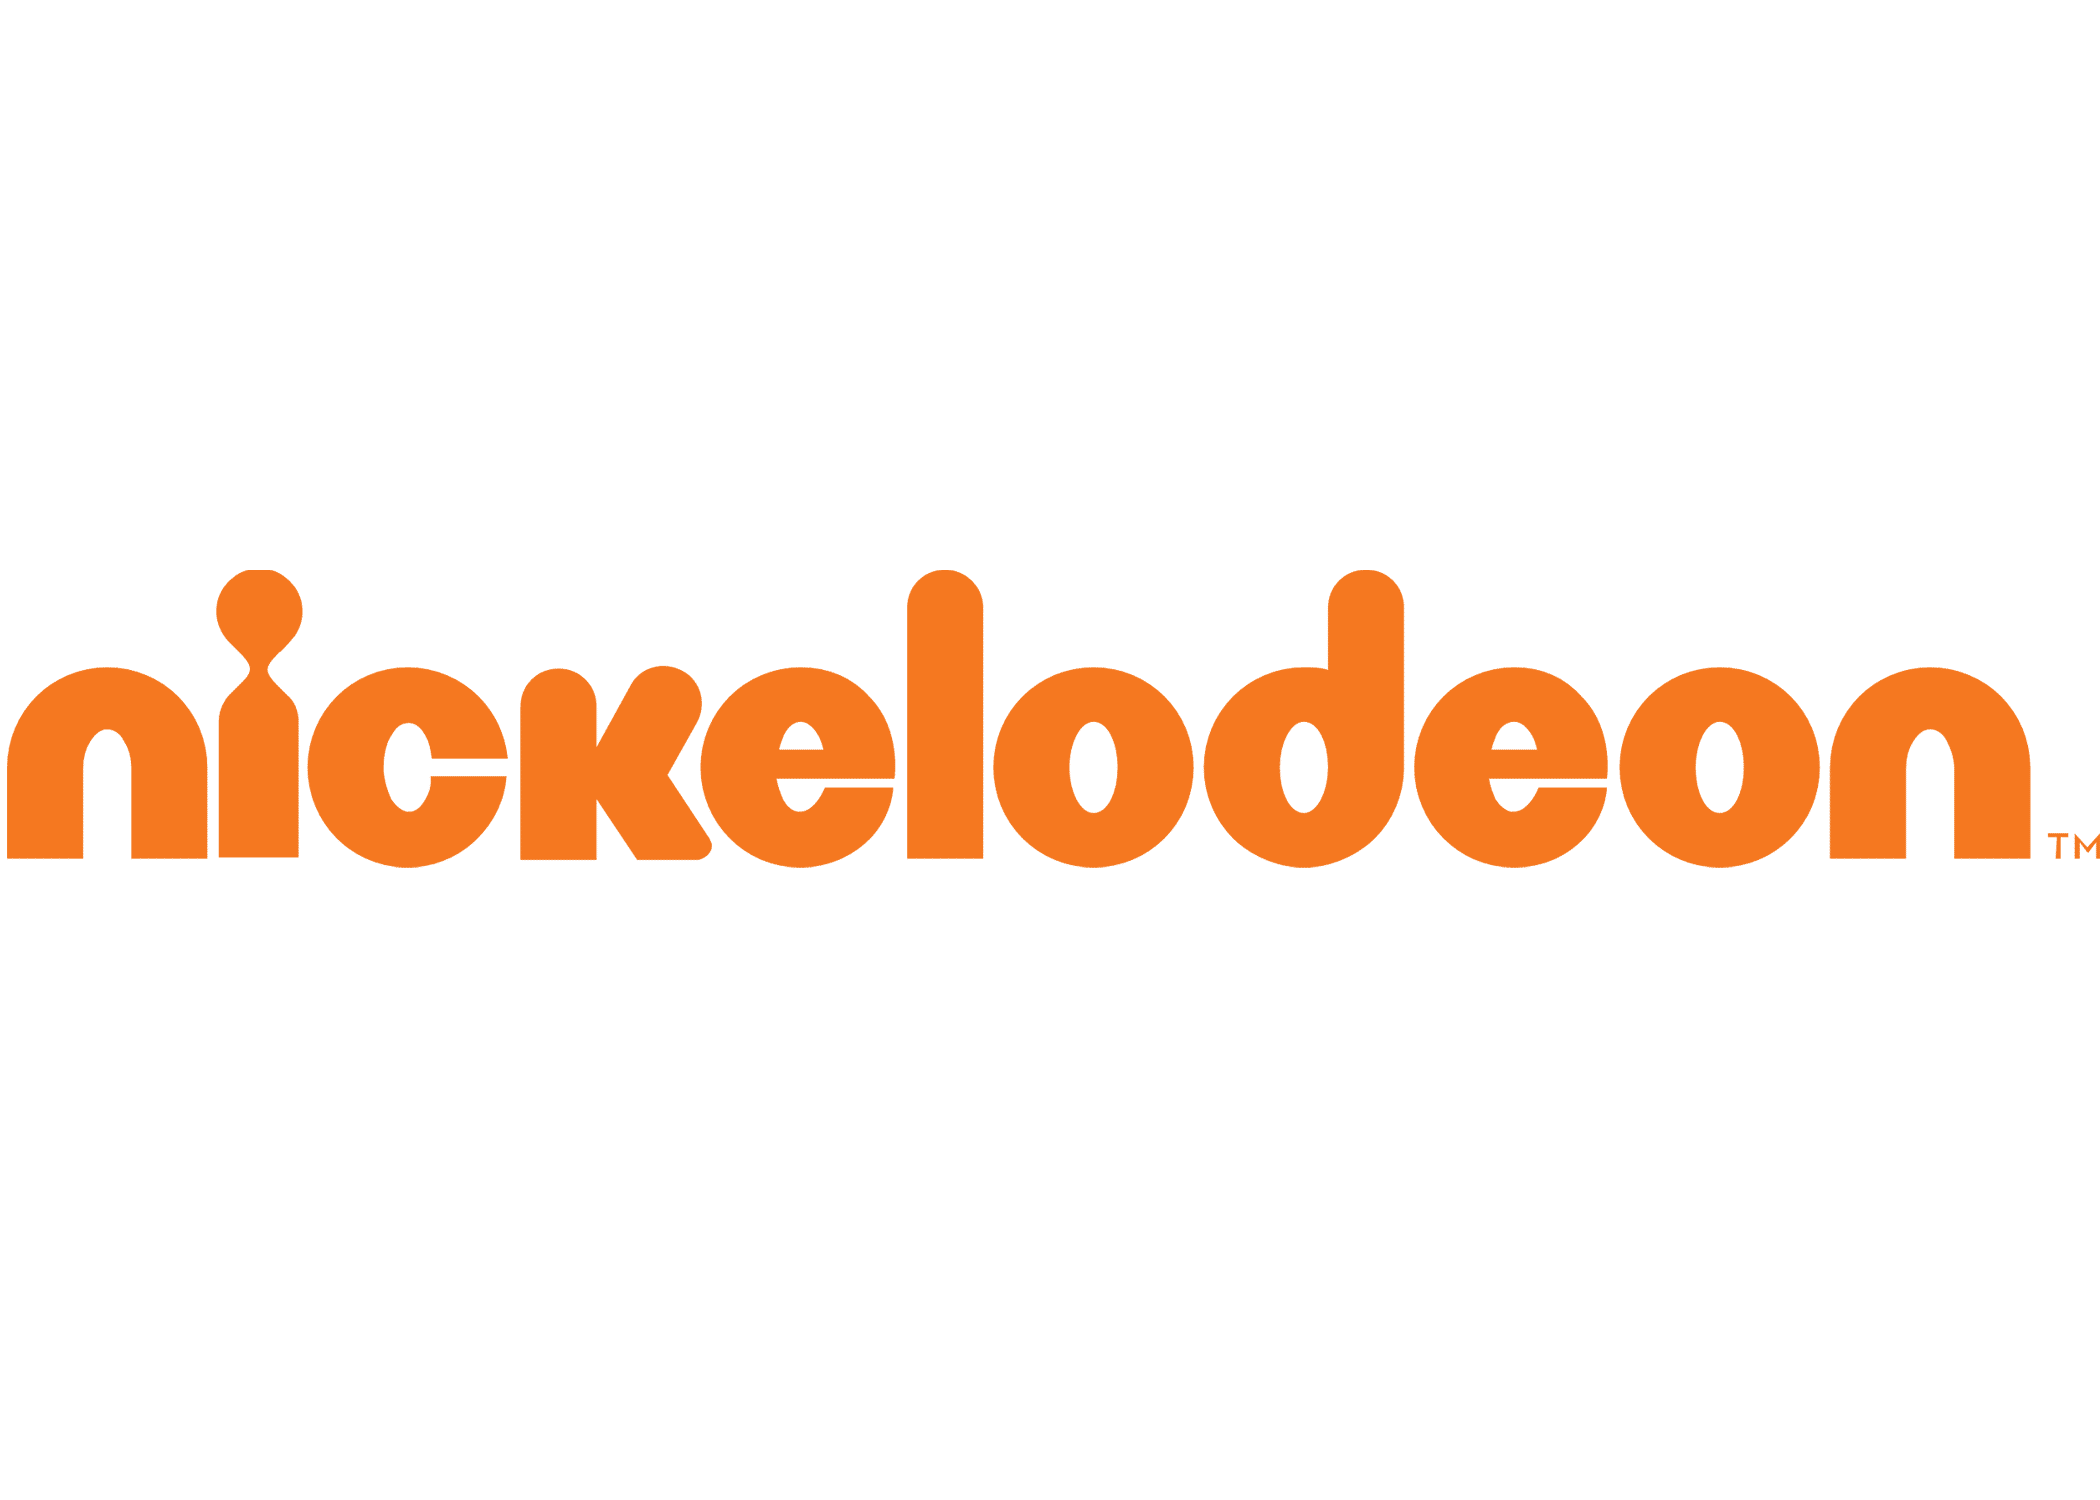 Nickelodeon-logo